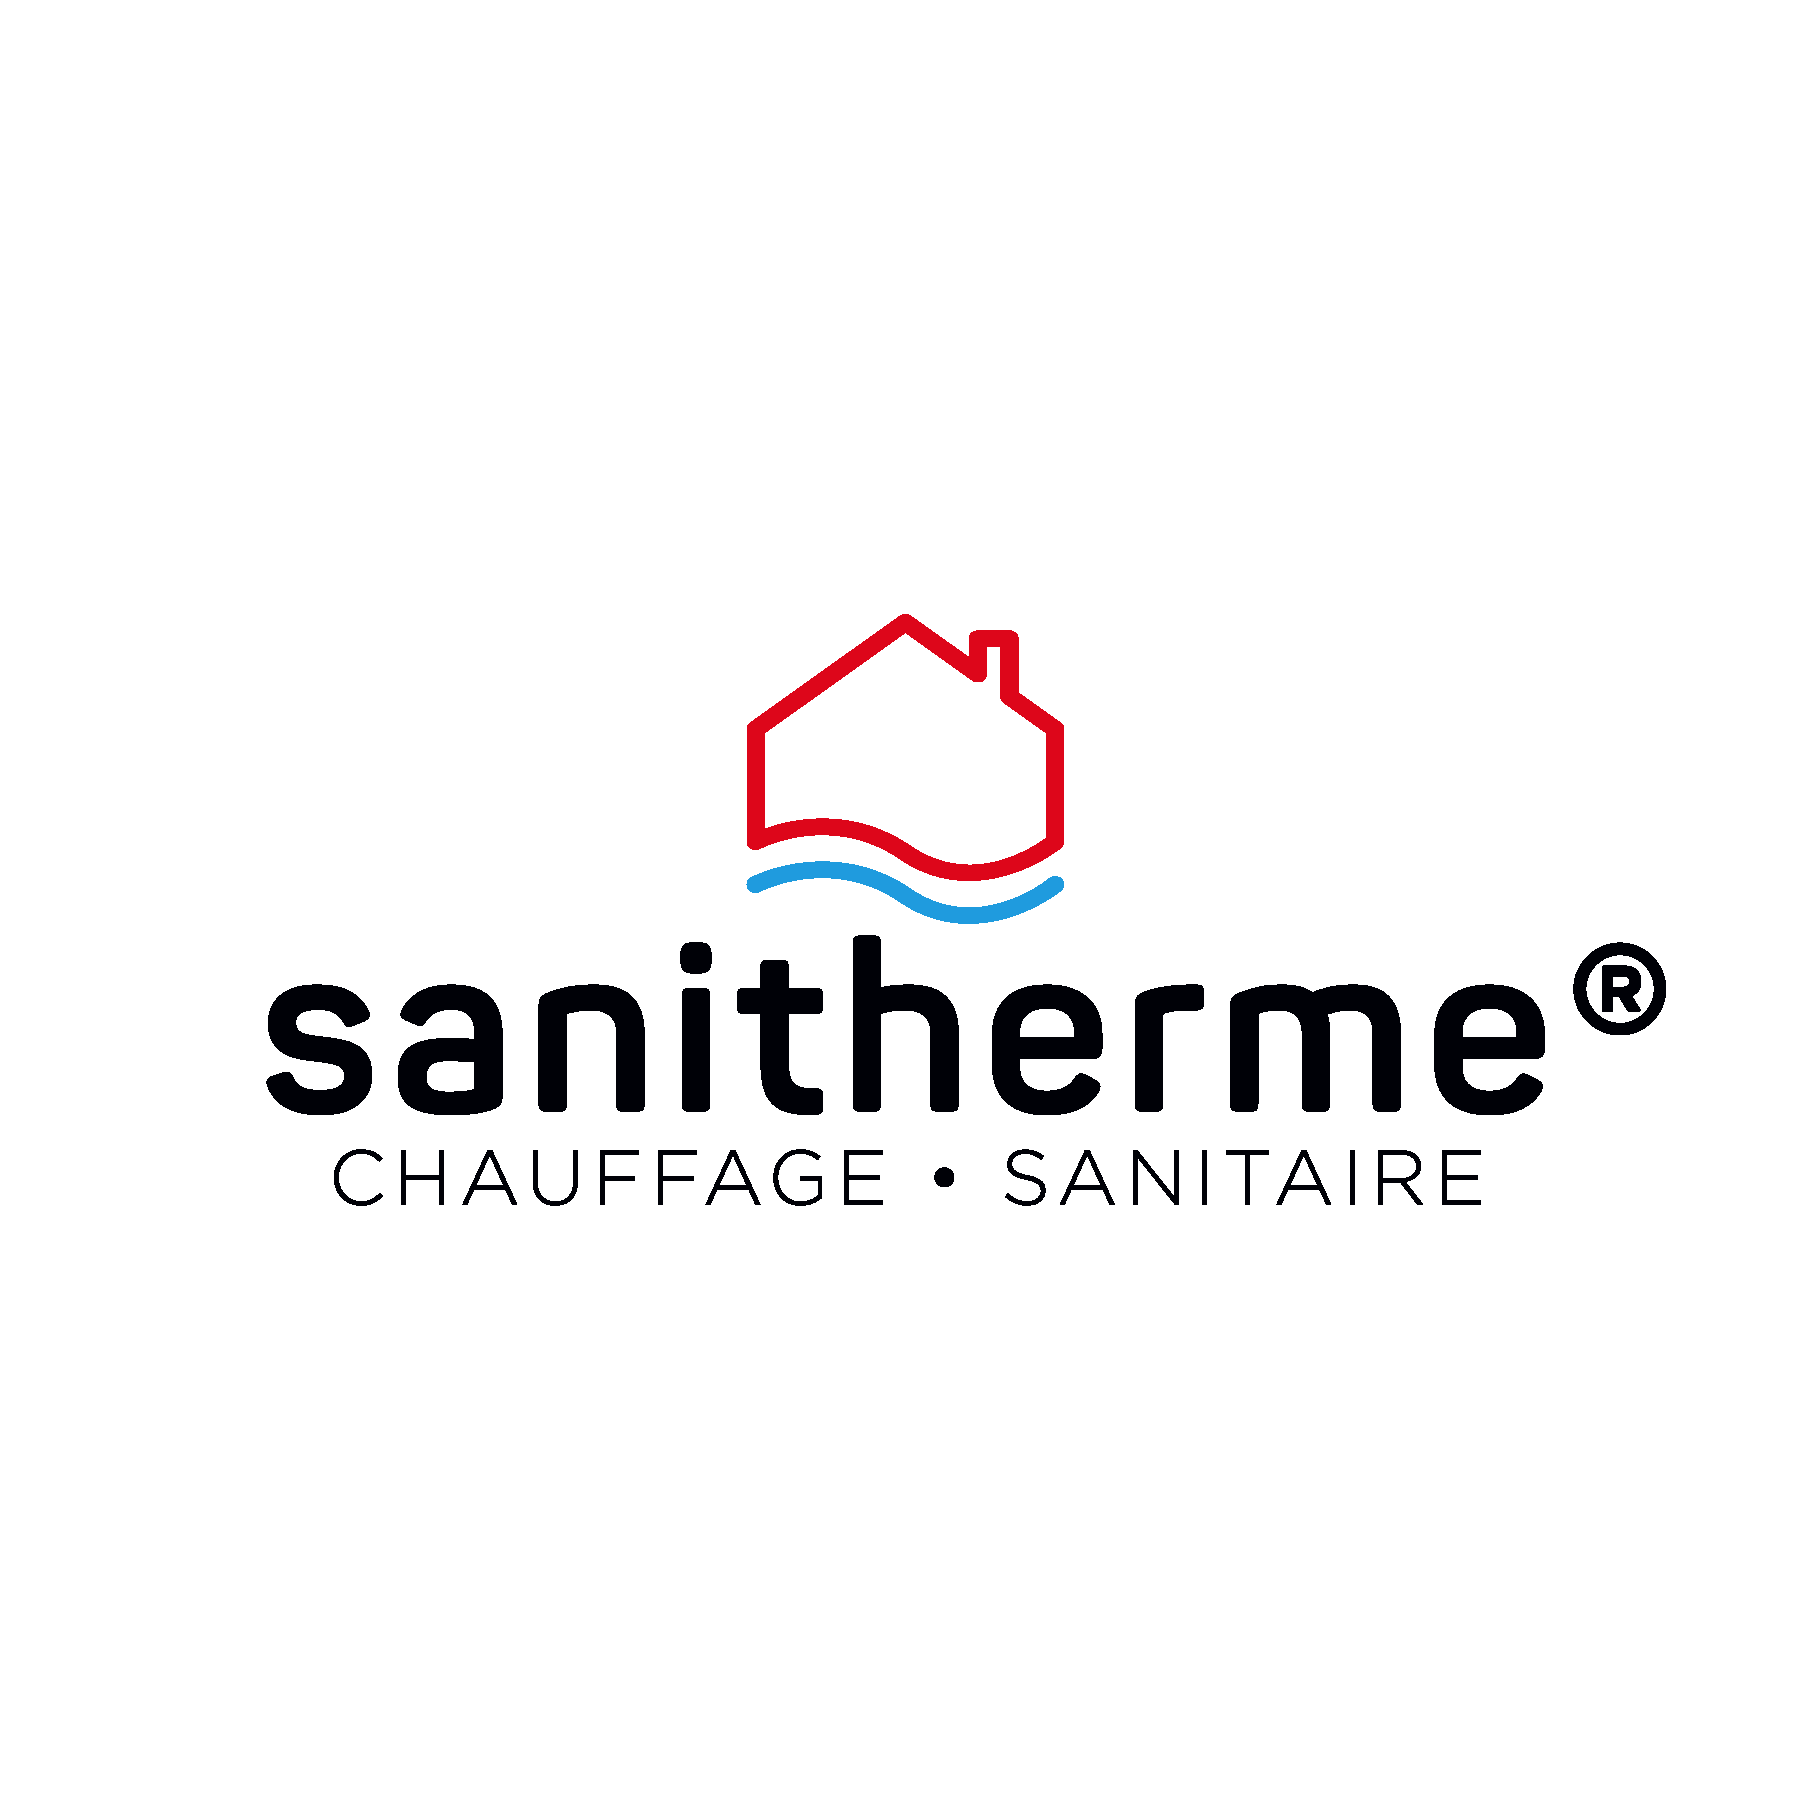 Sanitherme Logo